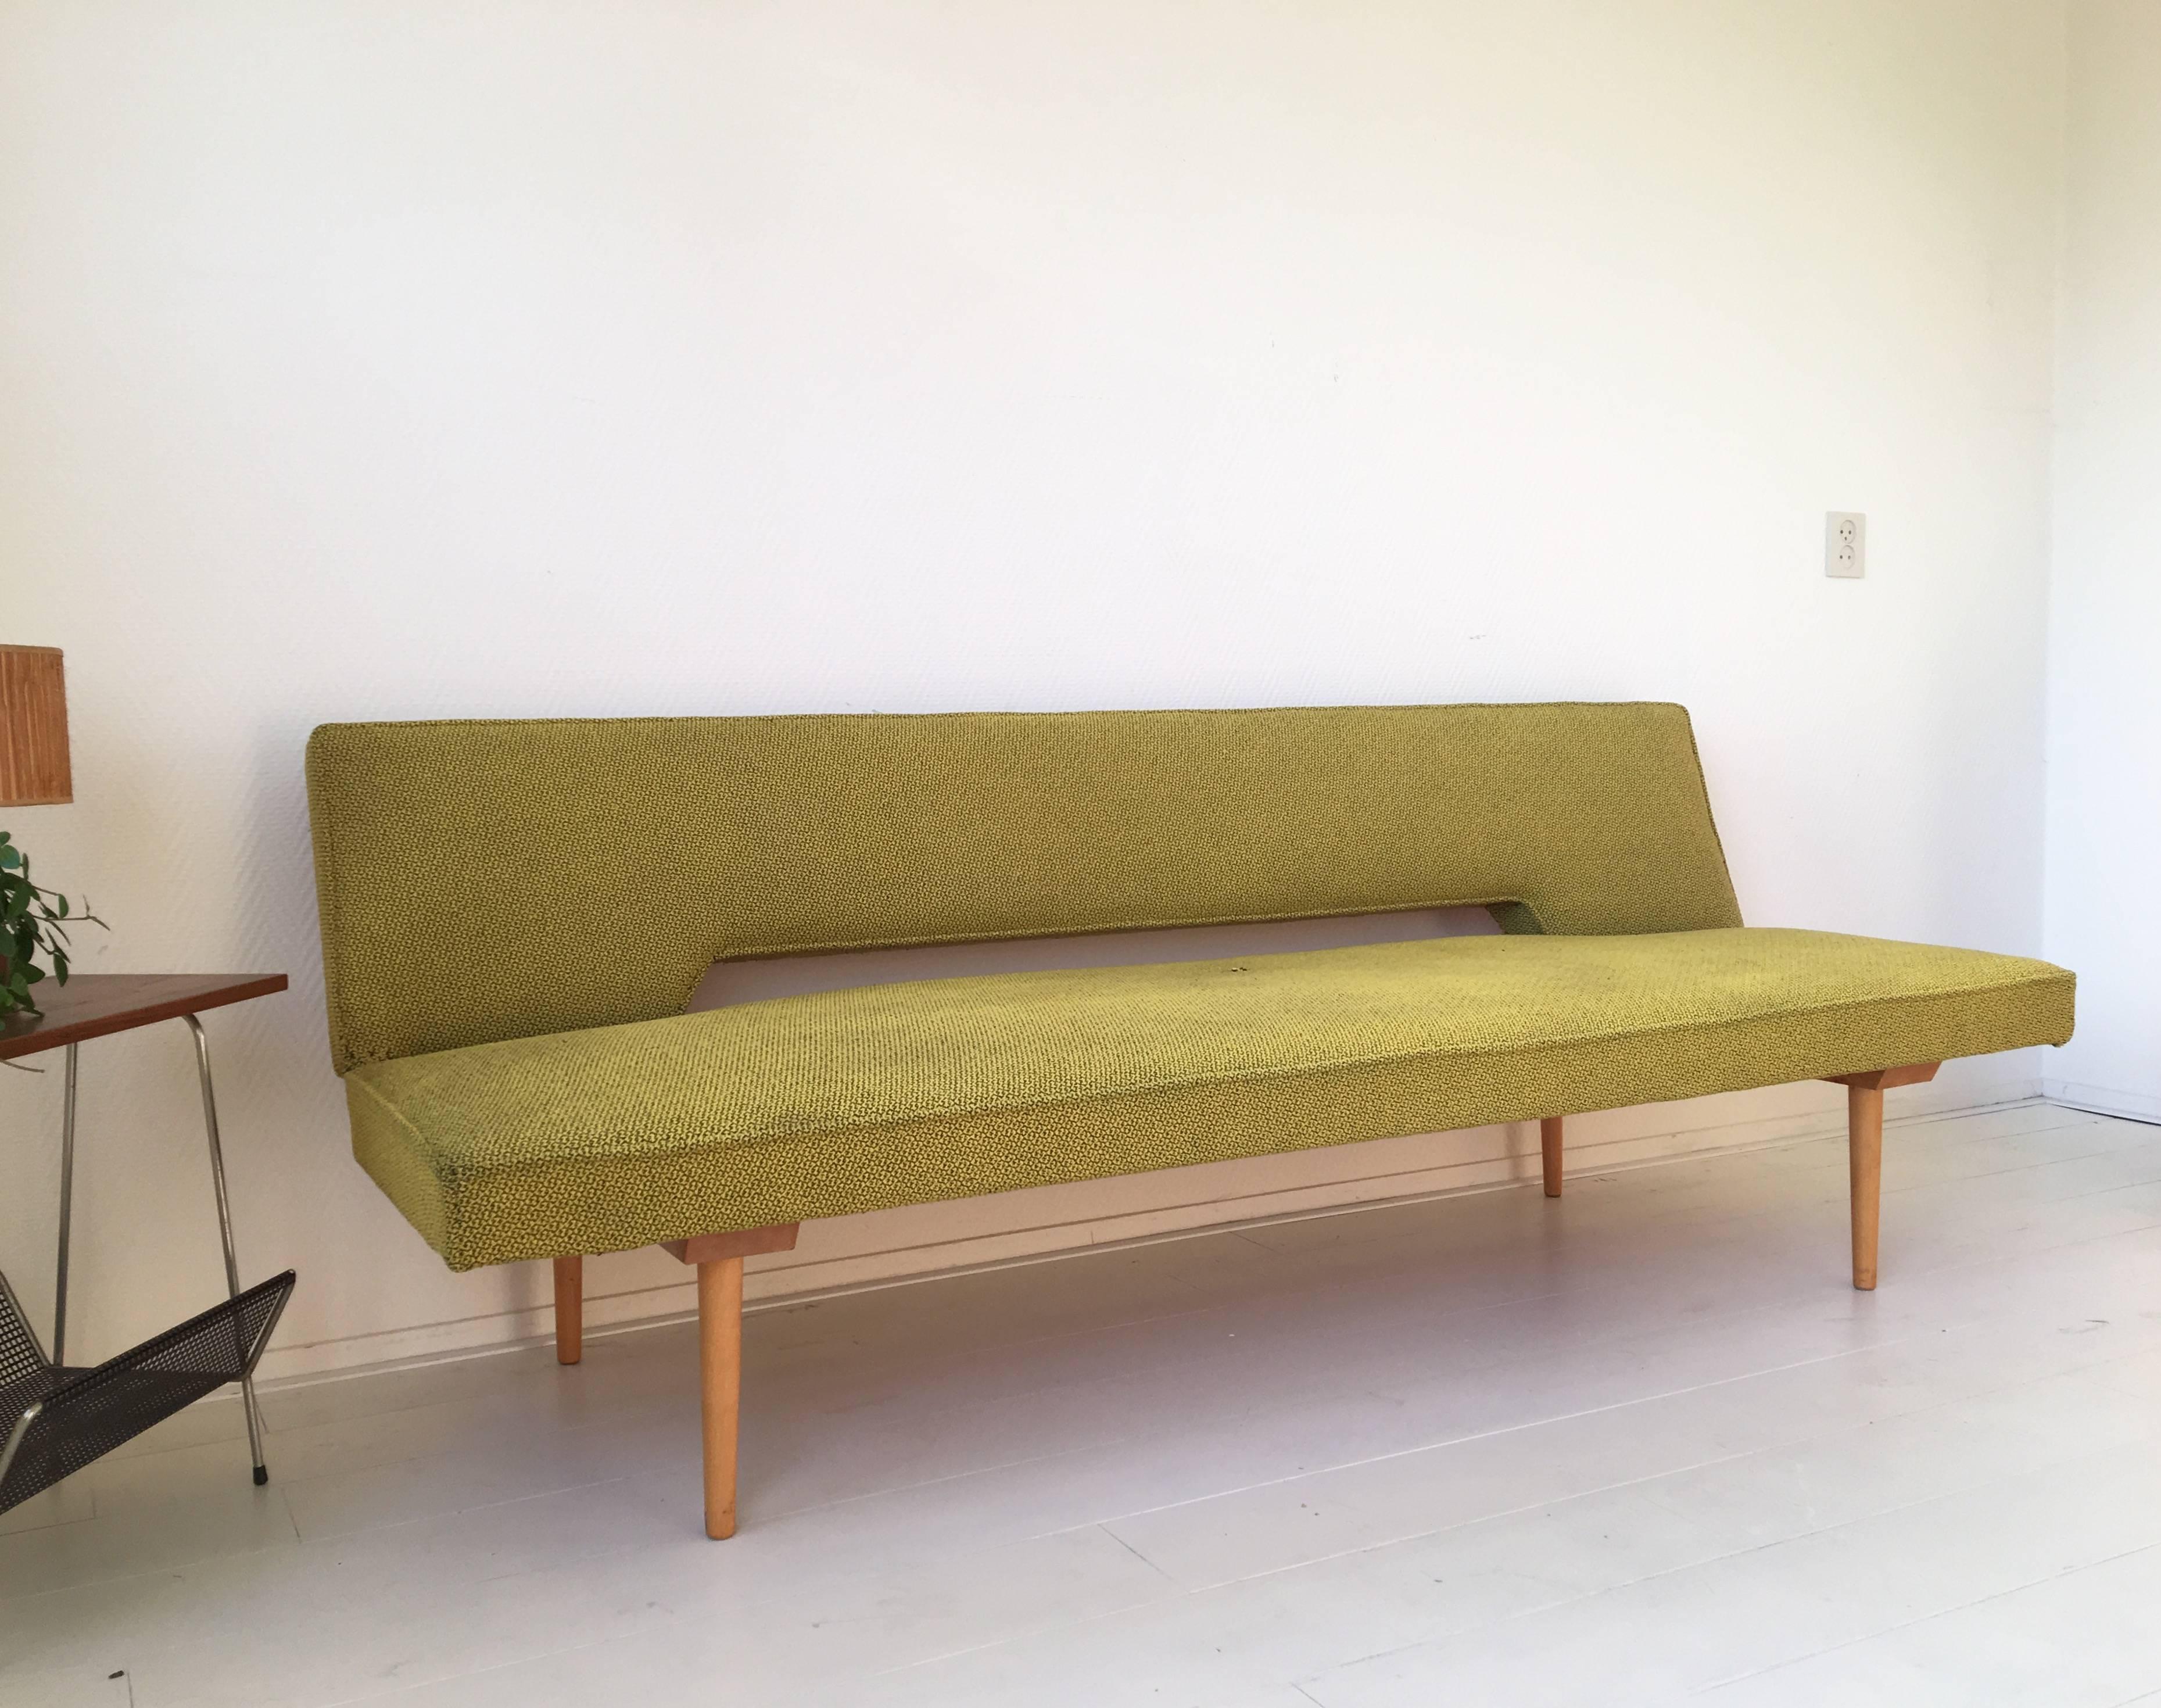 Czechoslovakian Sofa, Sleeper Sofa, Daybed by Miroslav Navratil, 1960s (Moderne der Mitte des Jahrhunderts)